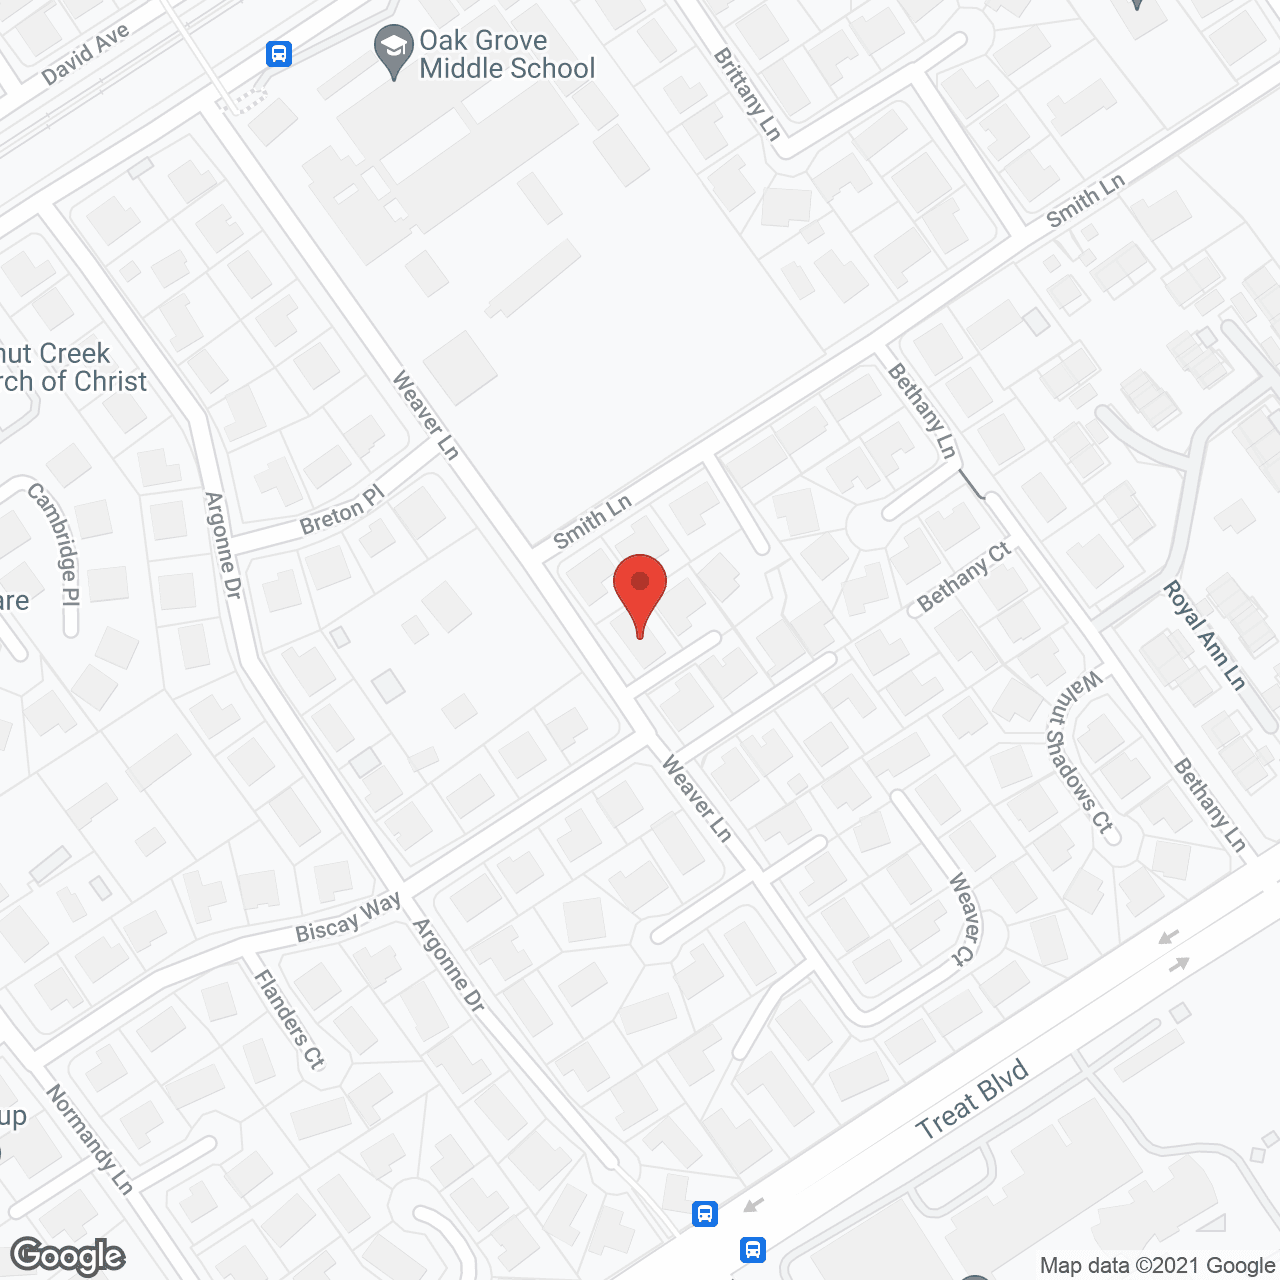 GLCS Care Home II in google map